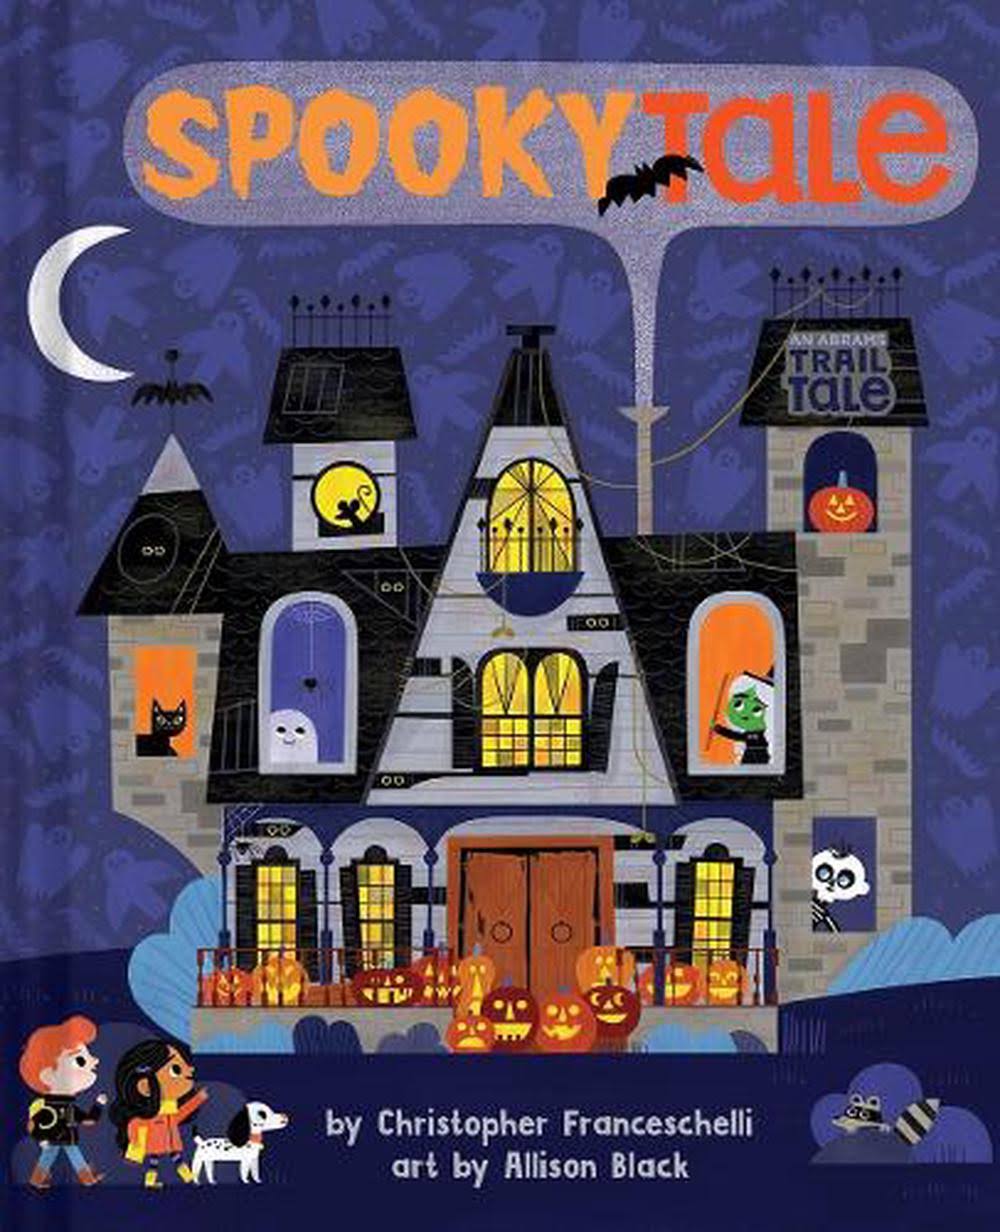 Spookytale (An Abrams Trail Tale) by Christopher Franceschelli